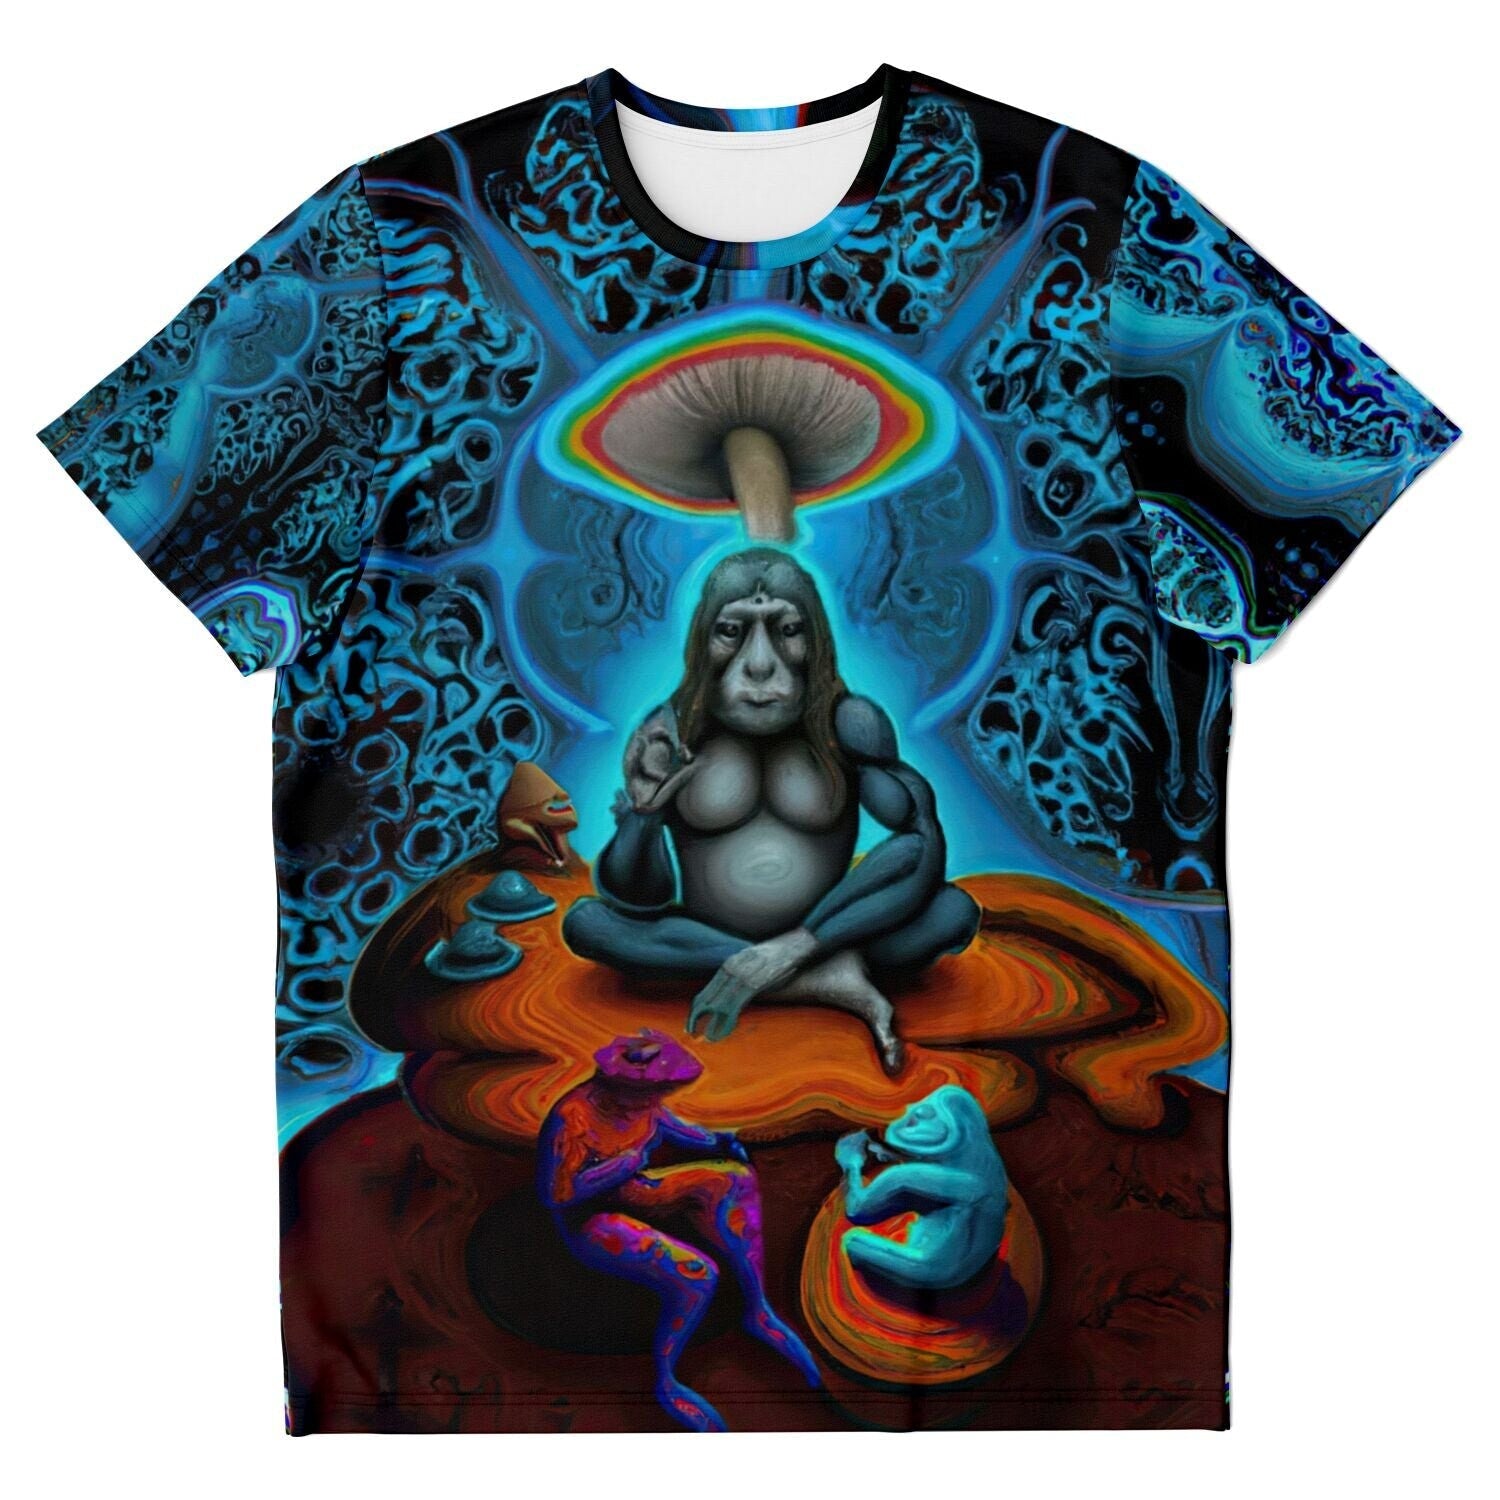 Stoned Ape Theory | Psychedelic Evolution | DMT, LSD, Ayahuasca, McKenna | Trippy Digital Art T-Shirt